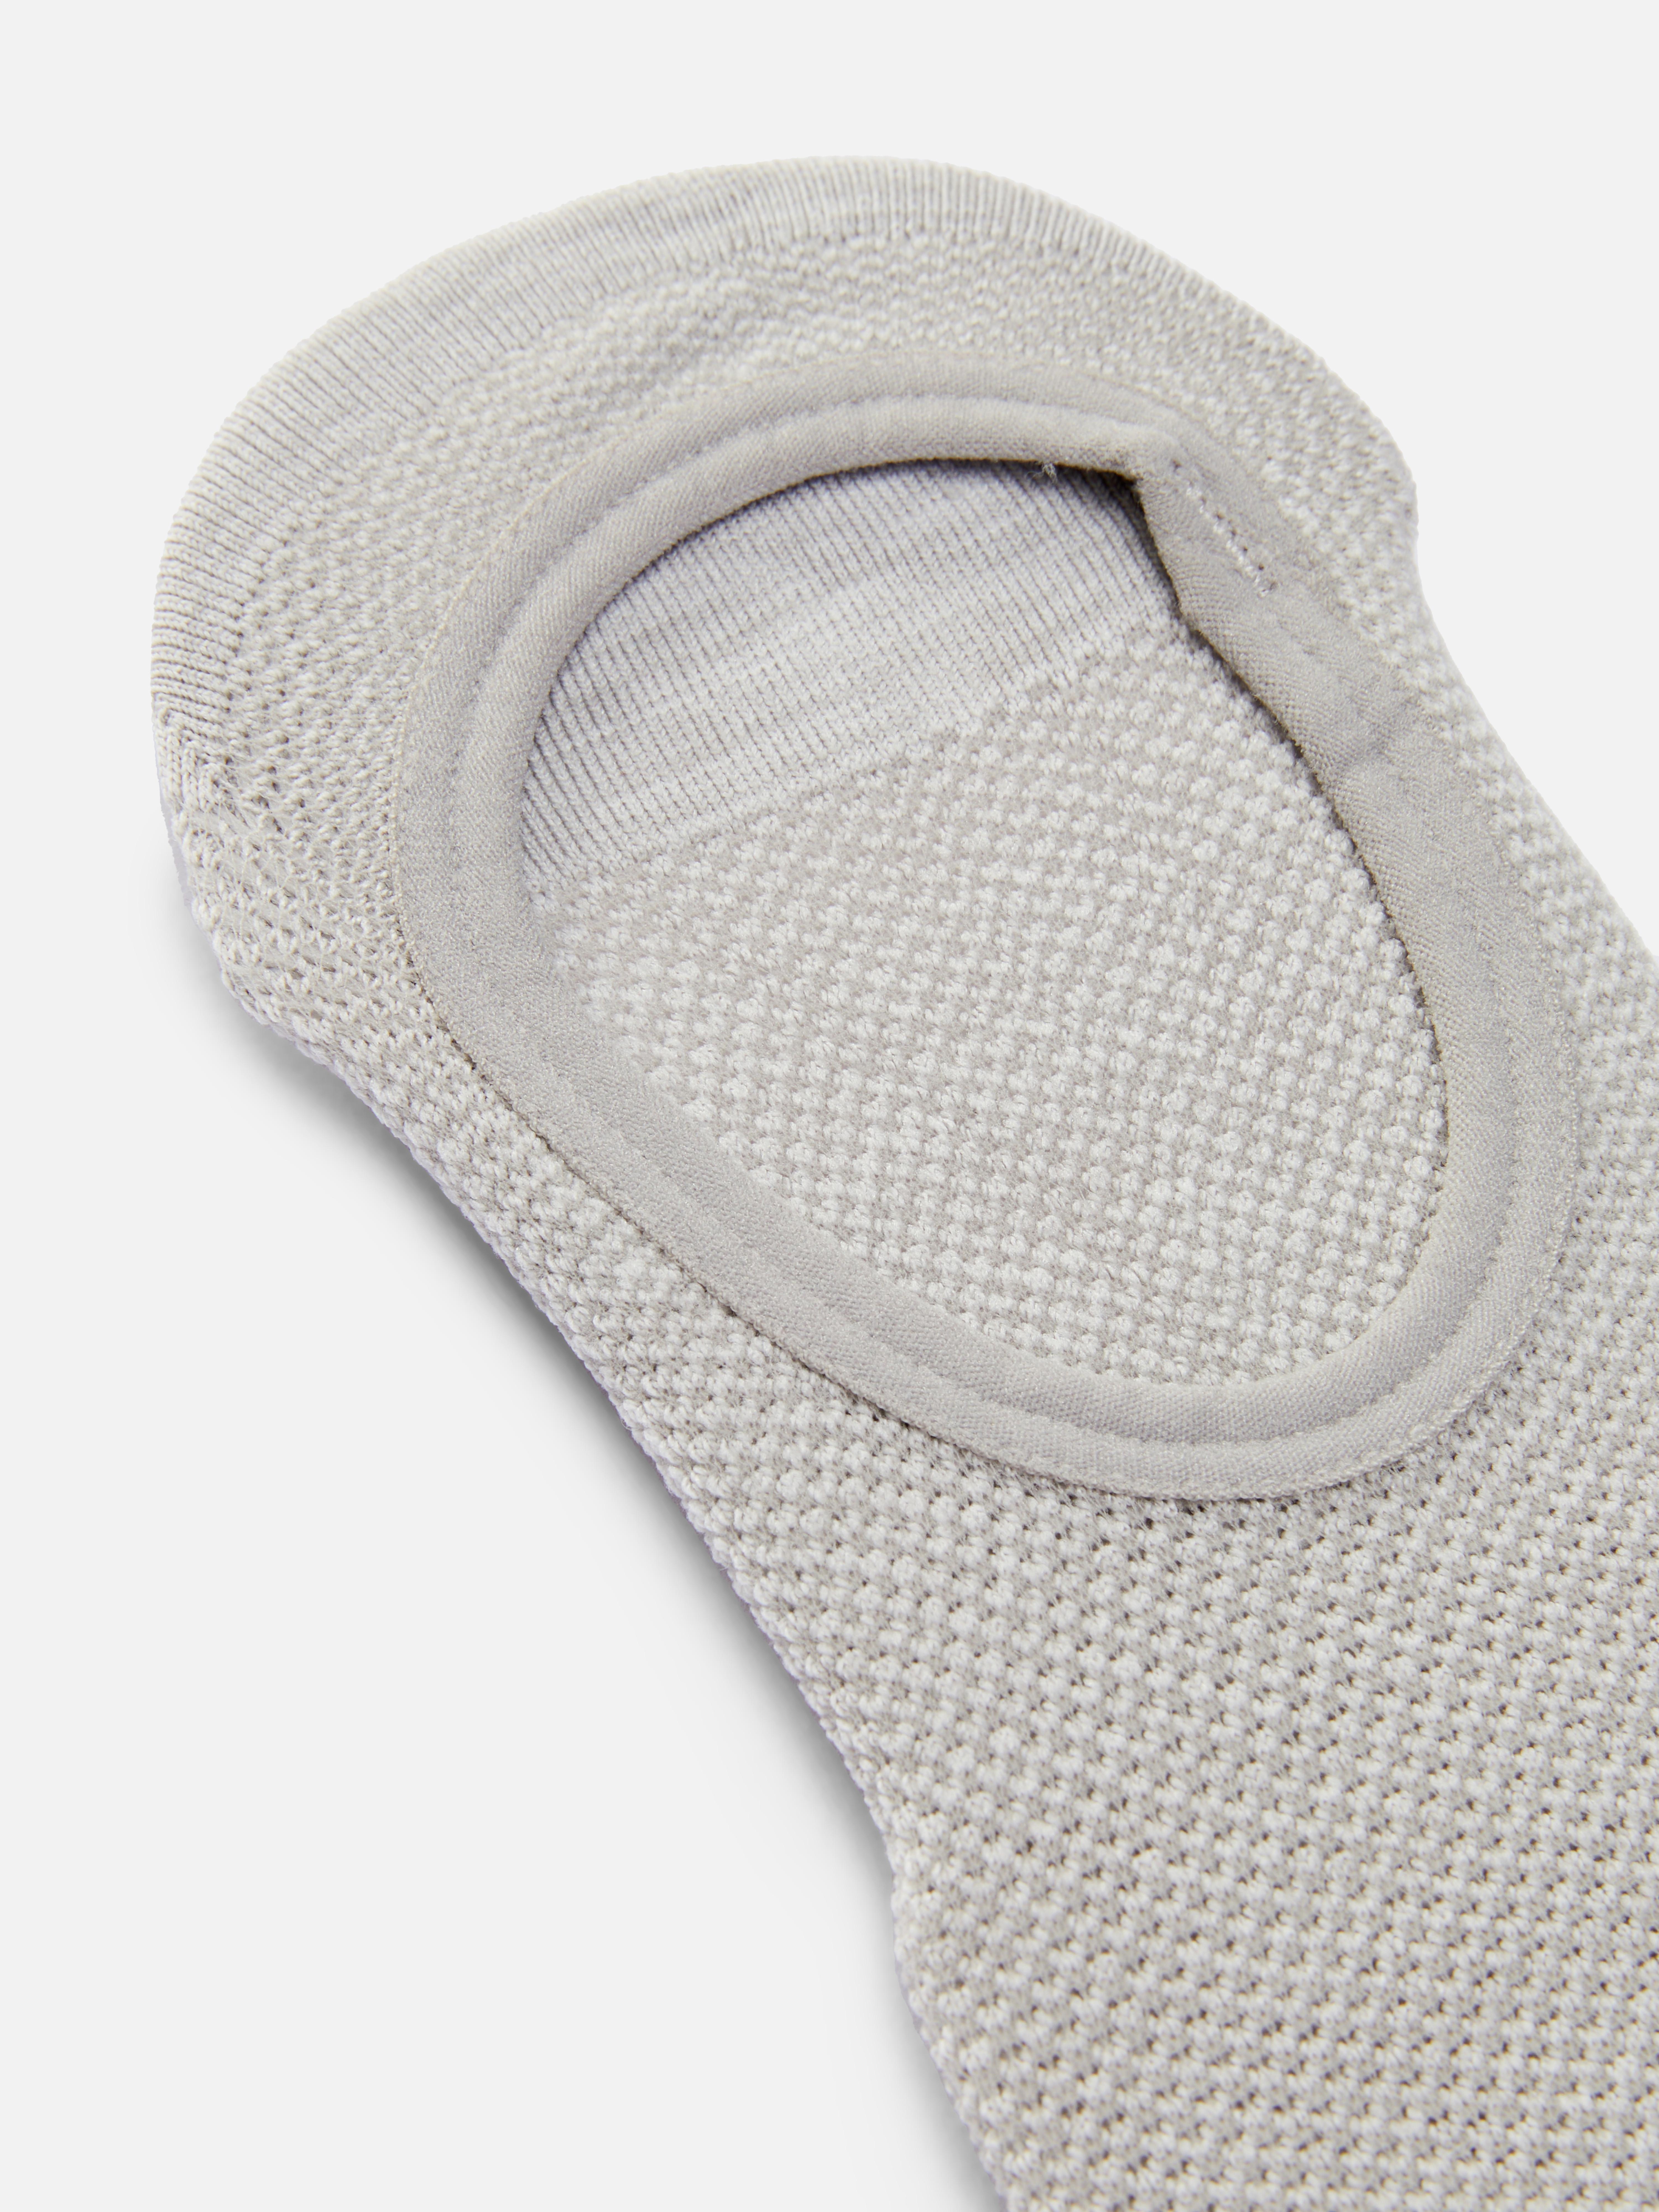 Pack 5 pares de calcetines deportivos invisibles | Primark